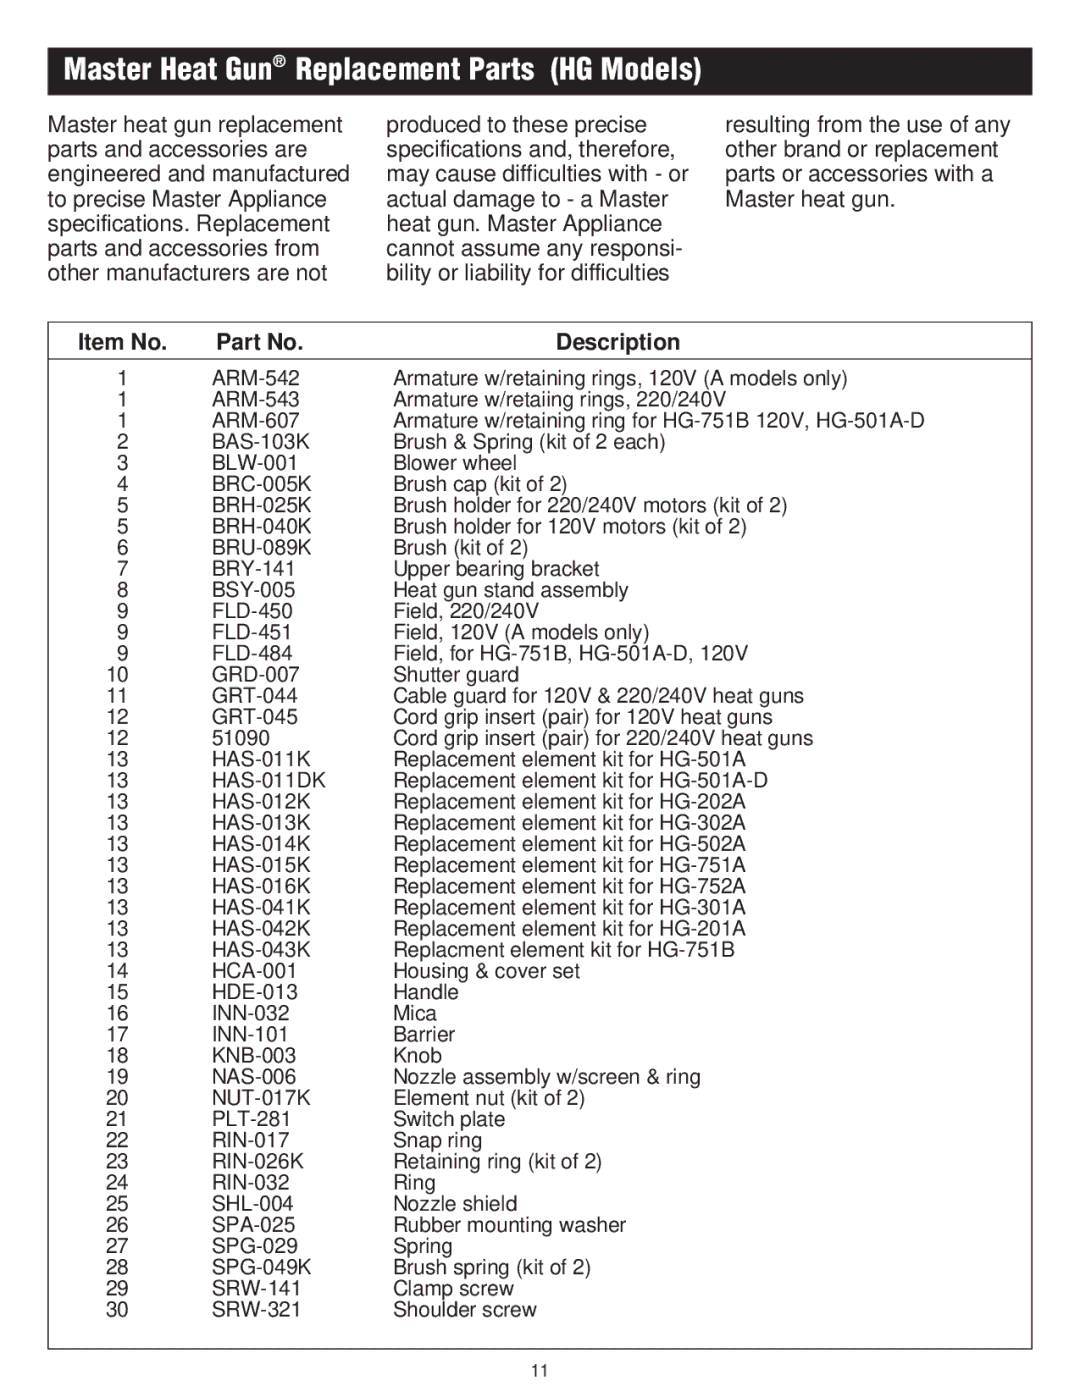 Master Appliance PH-1100 instruction manual Master Heat Gun Replacement Parts HG Models, Item No Description 